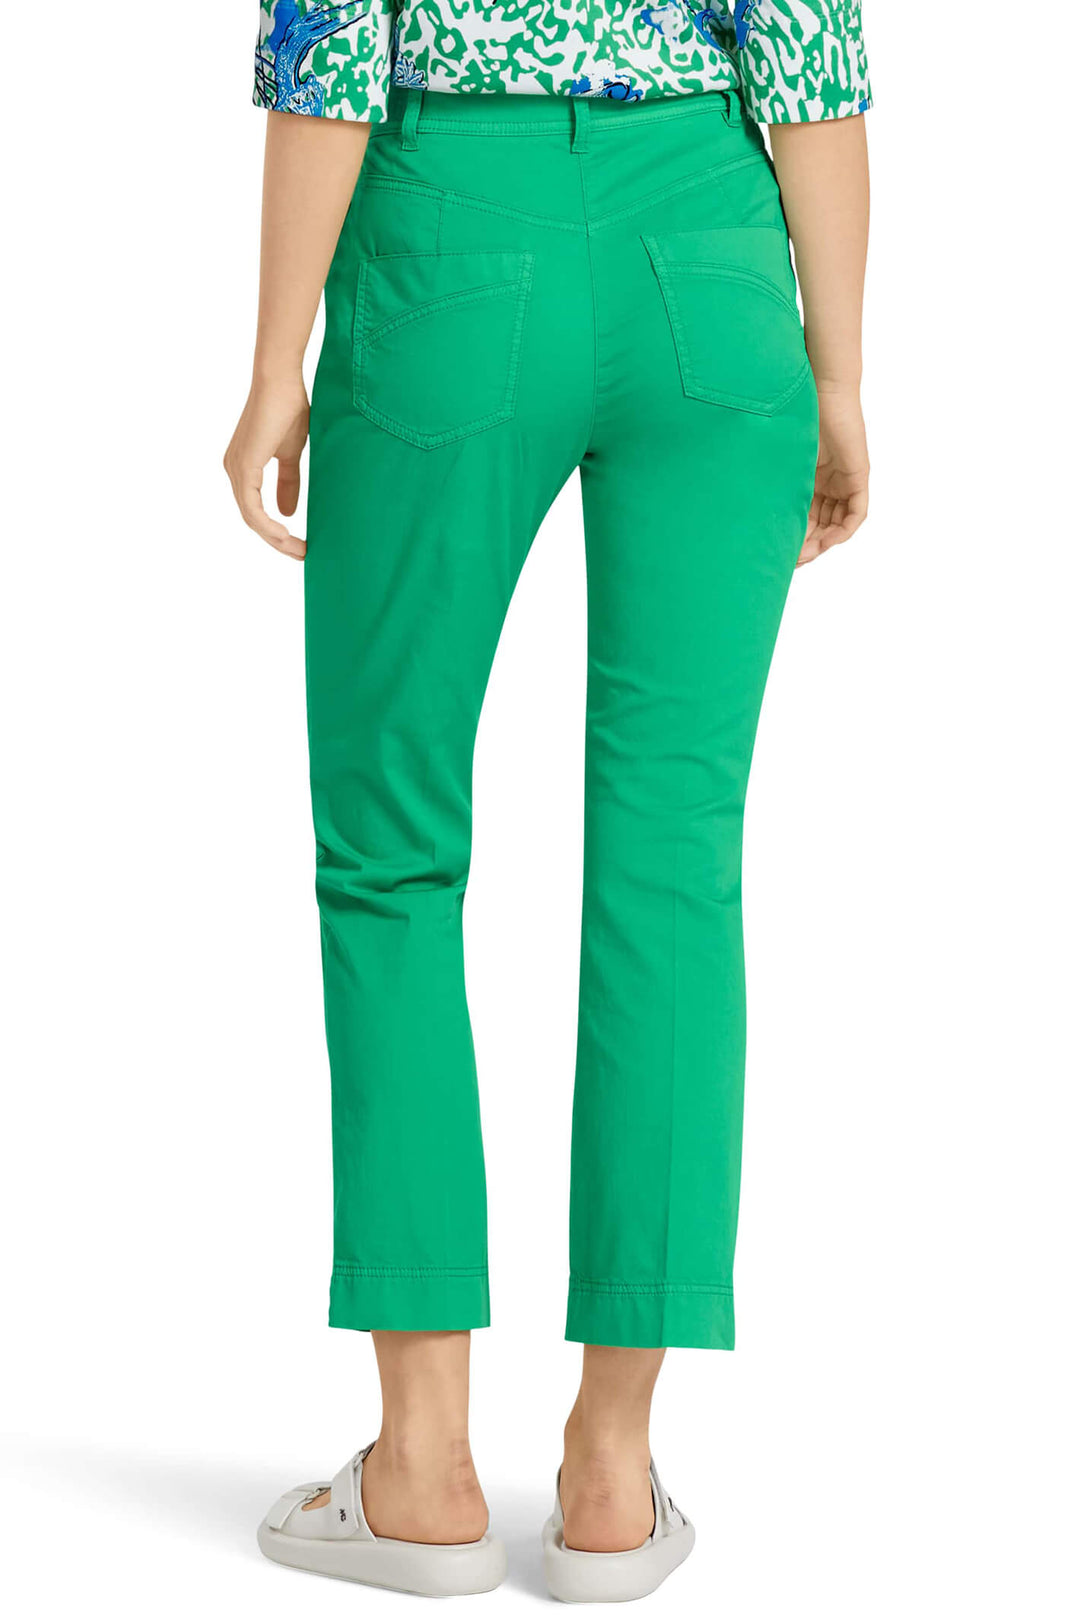 Marc Cain Sports US 81.43 W62 552 Bright Basil Leaf Green Trousers - Olivia Grace Fashion